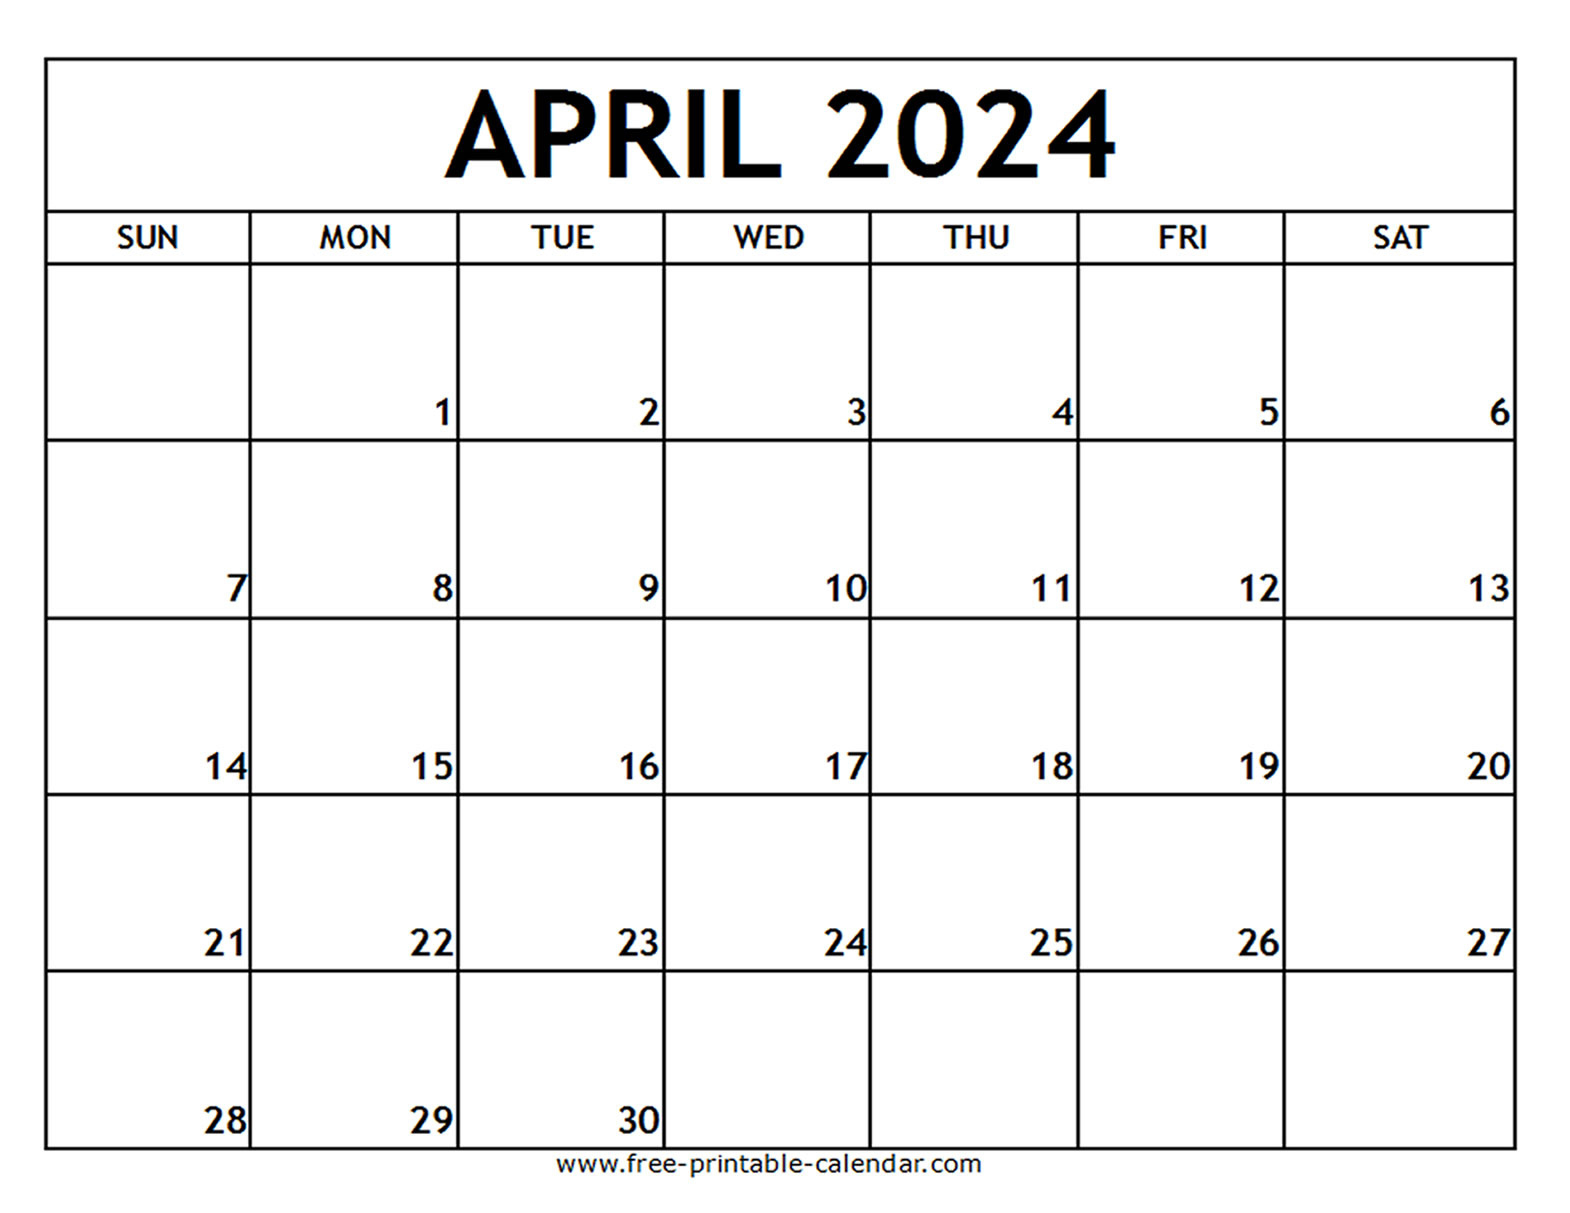 April 2024 Printable Calendar - Free-Printable-Calendar with regard to Free Printable April Monthly Calendar 2024